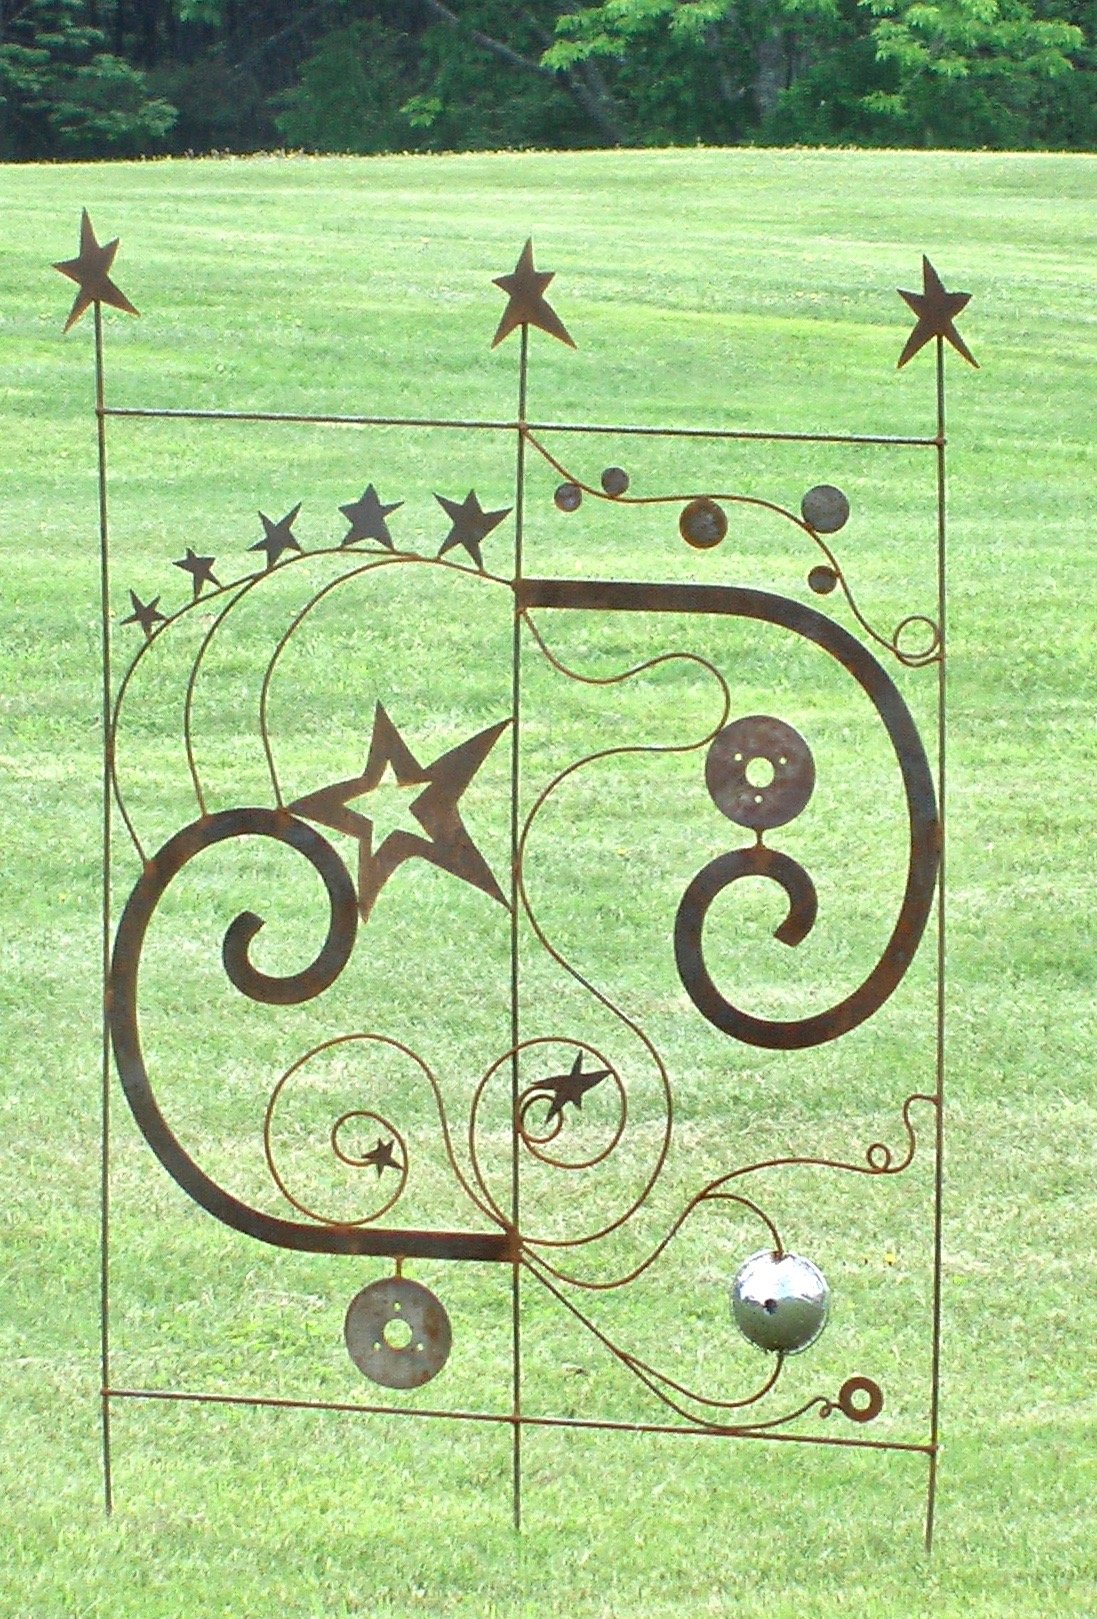 Star Trellis lawn (private collection)